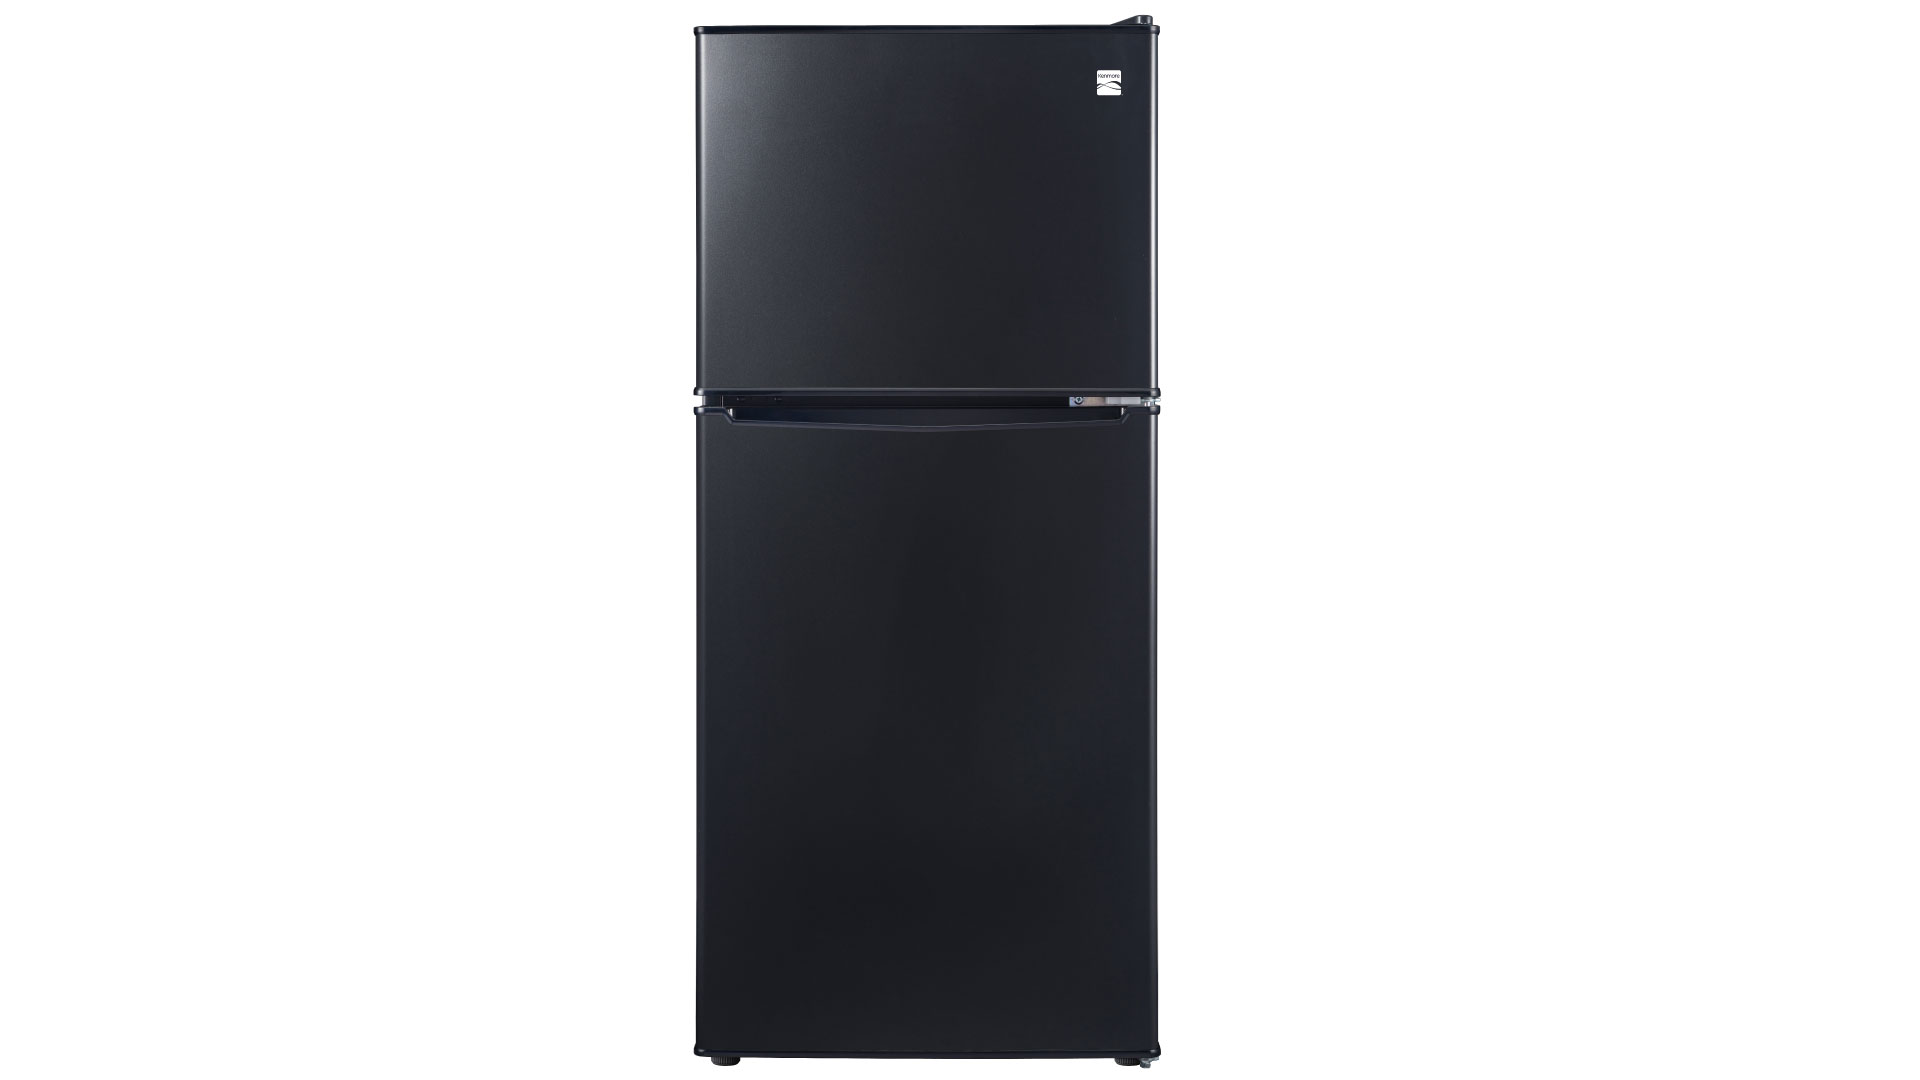 Kenmore 4 cubic foot fridge, black, front view.